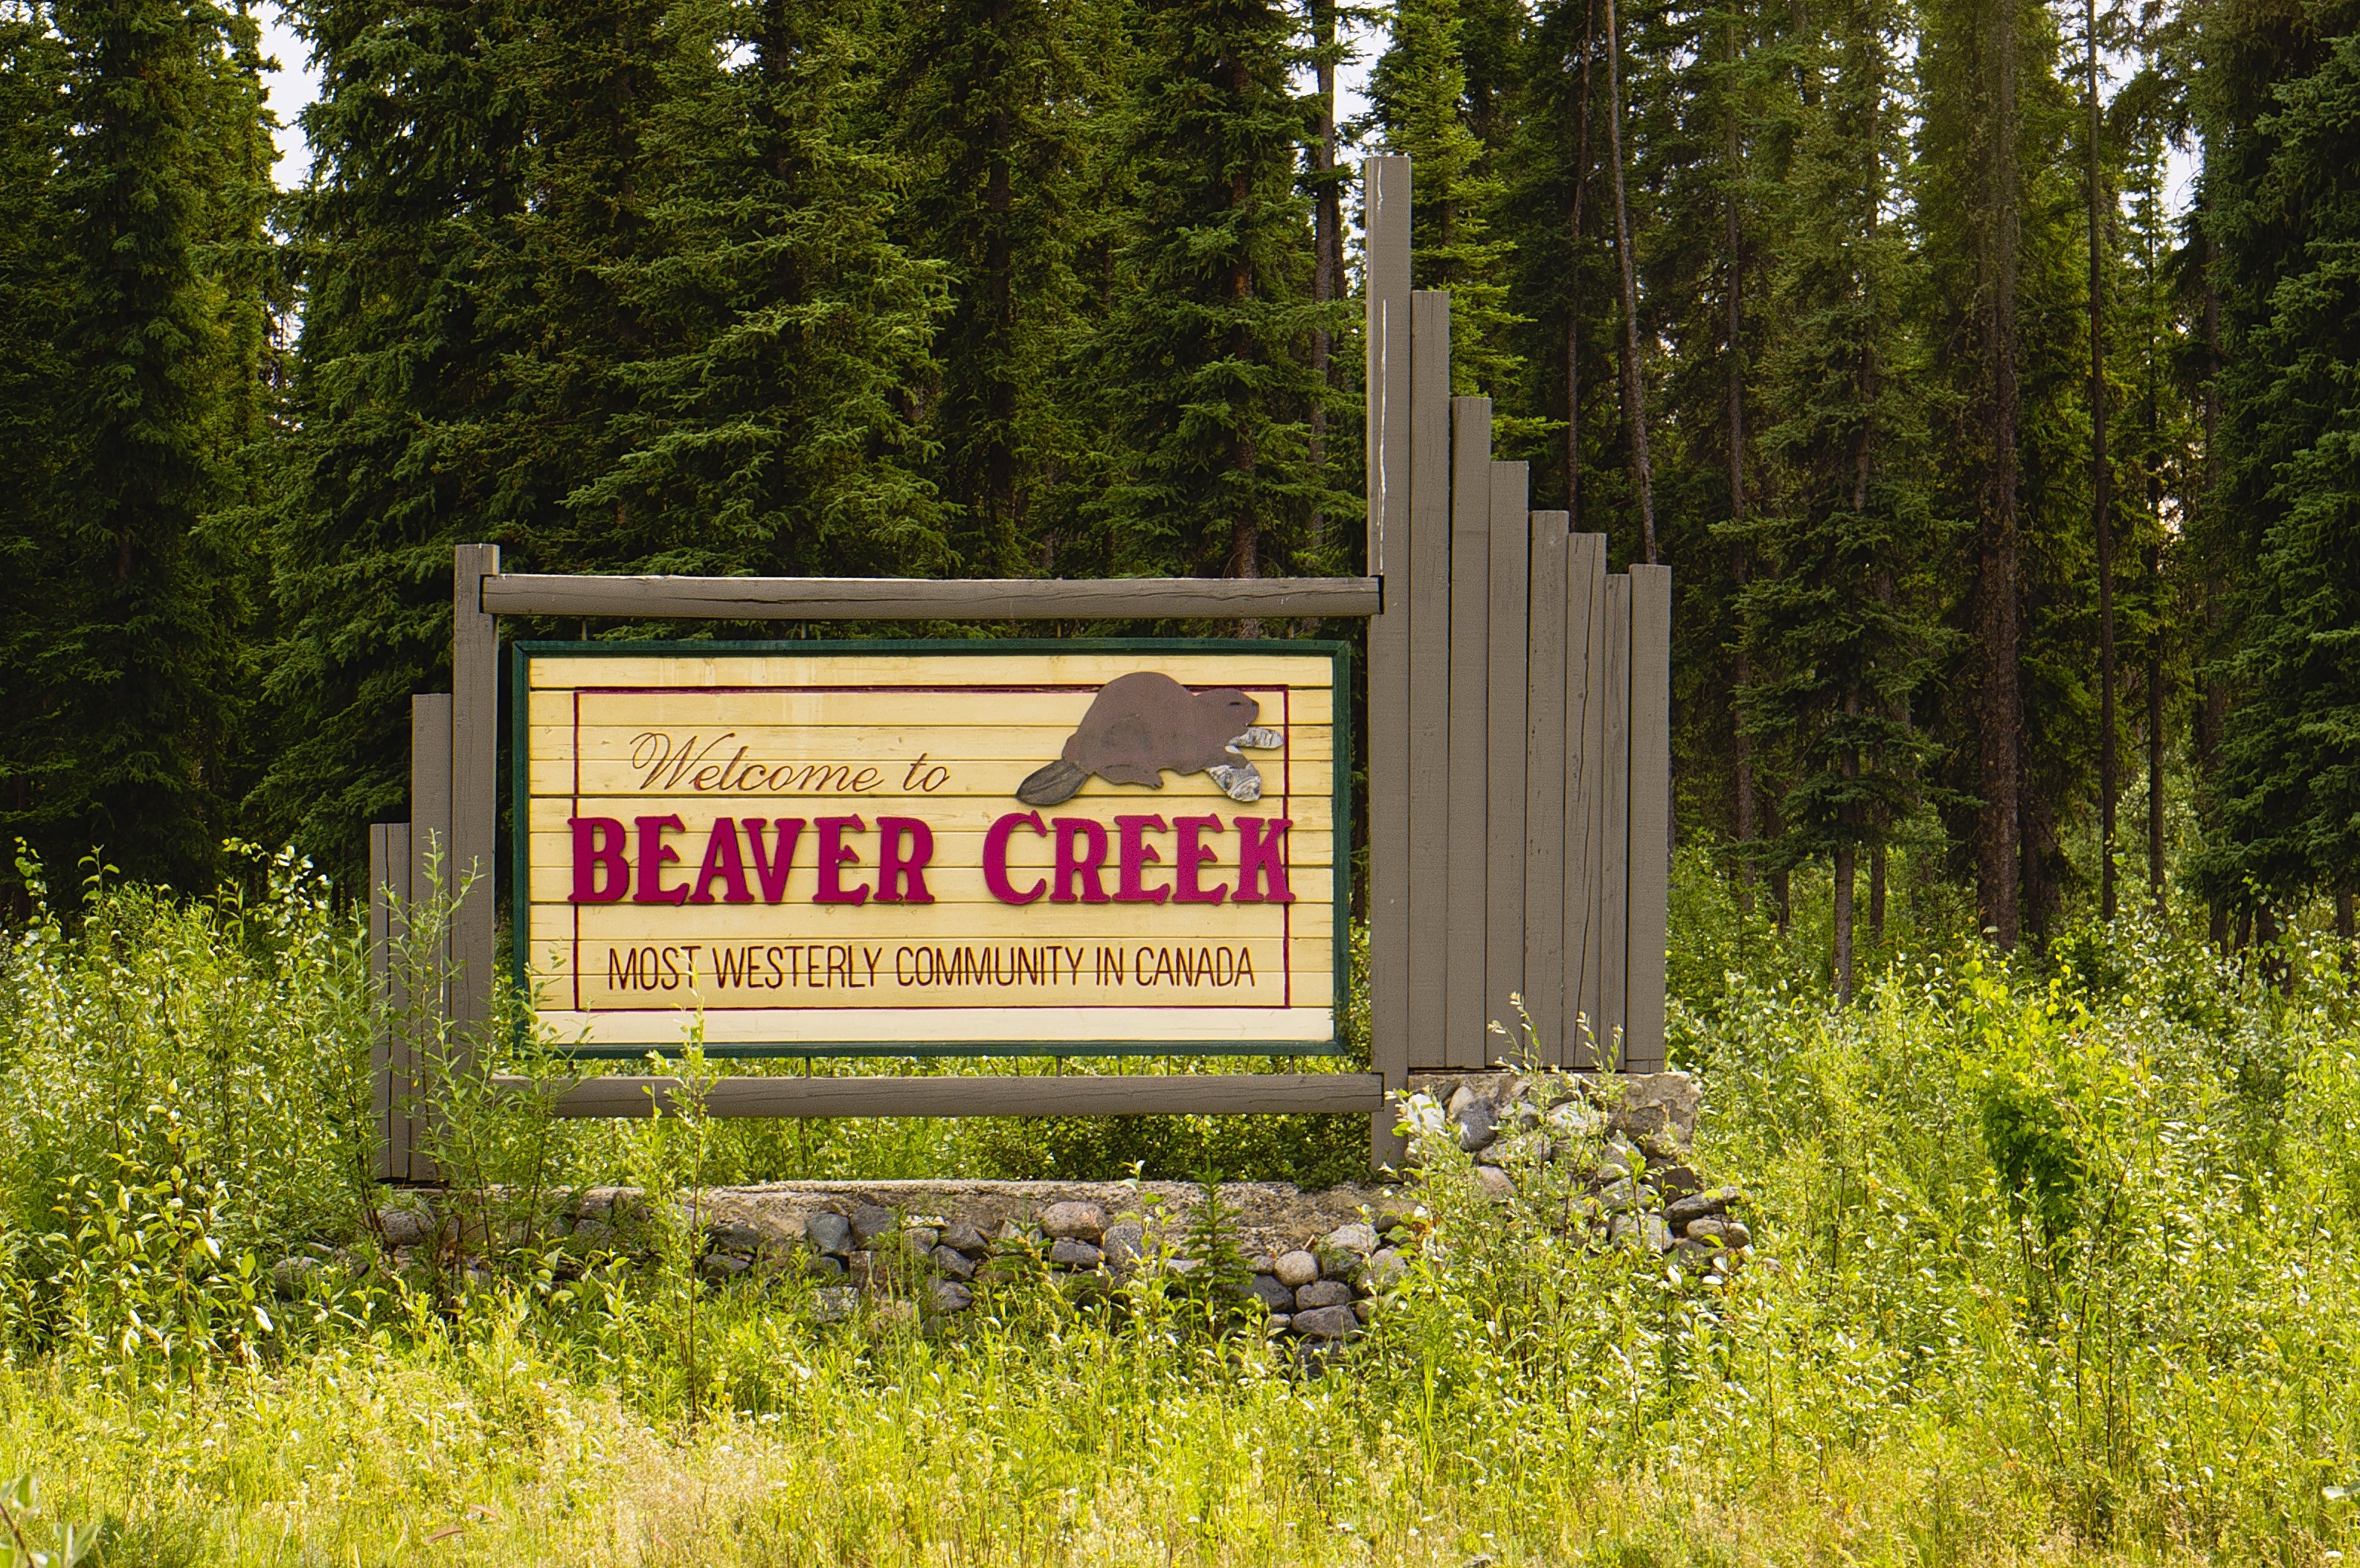 The welcome sign at Beaver Creek, Yukon. Representational image.